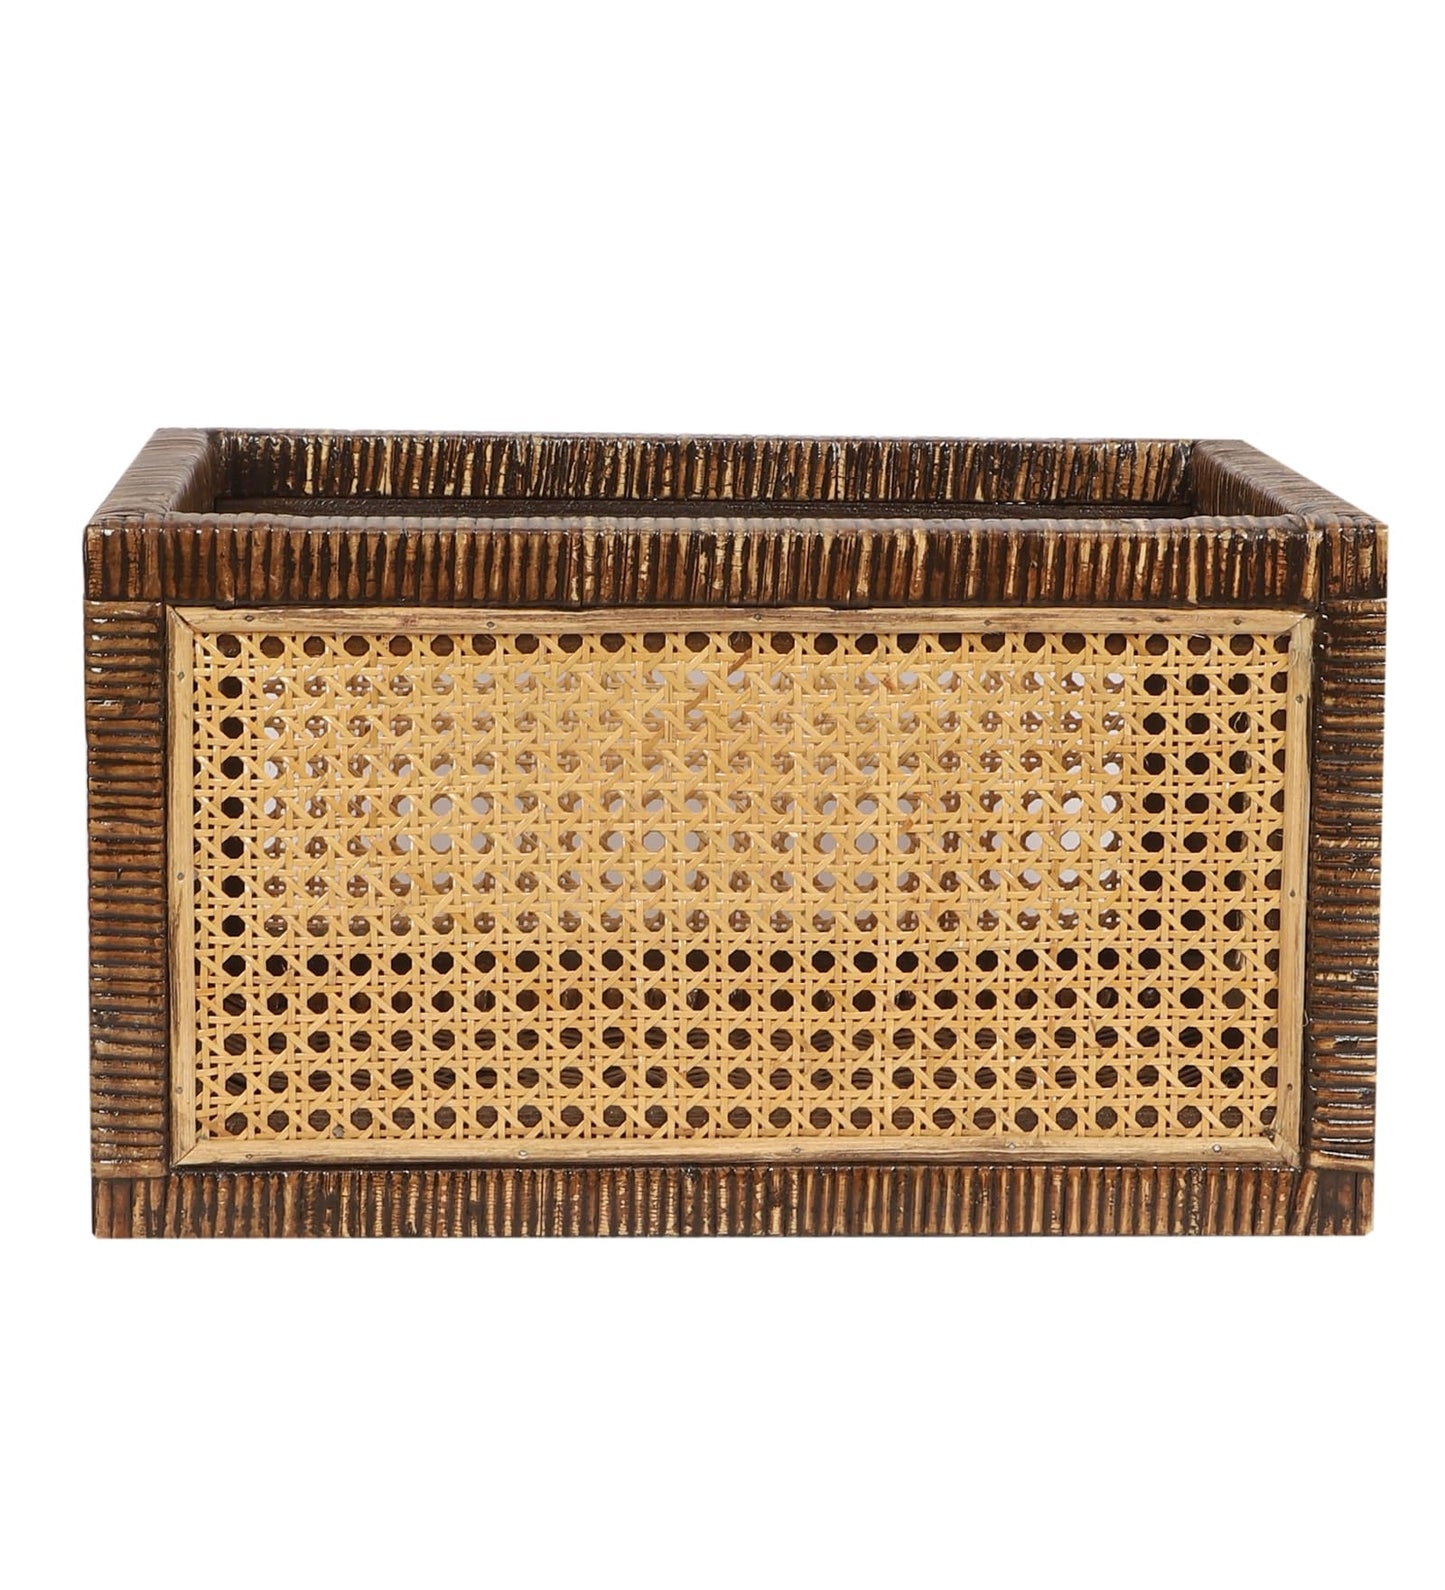 Akway Rattan cane webbing Storage basket | Wicker basket for storage organizer | Kauna Grass storage basket For Home | Kitchn Living Room - (Medium, Dark Brown) - Akway